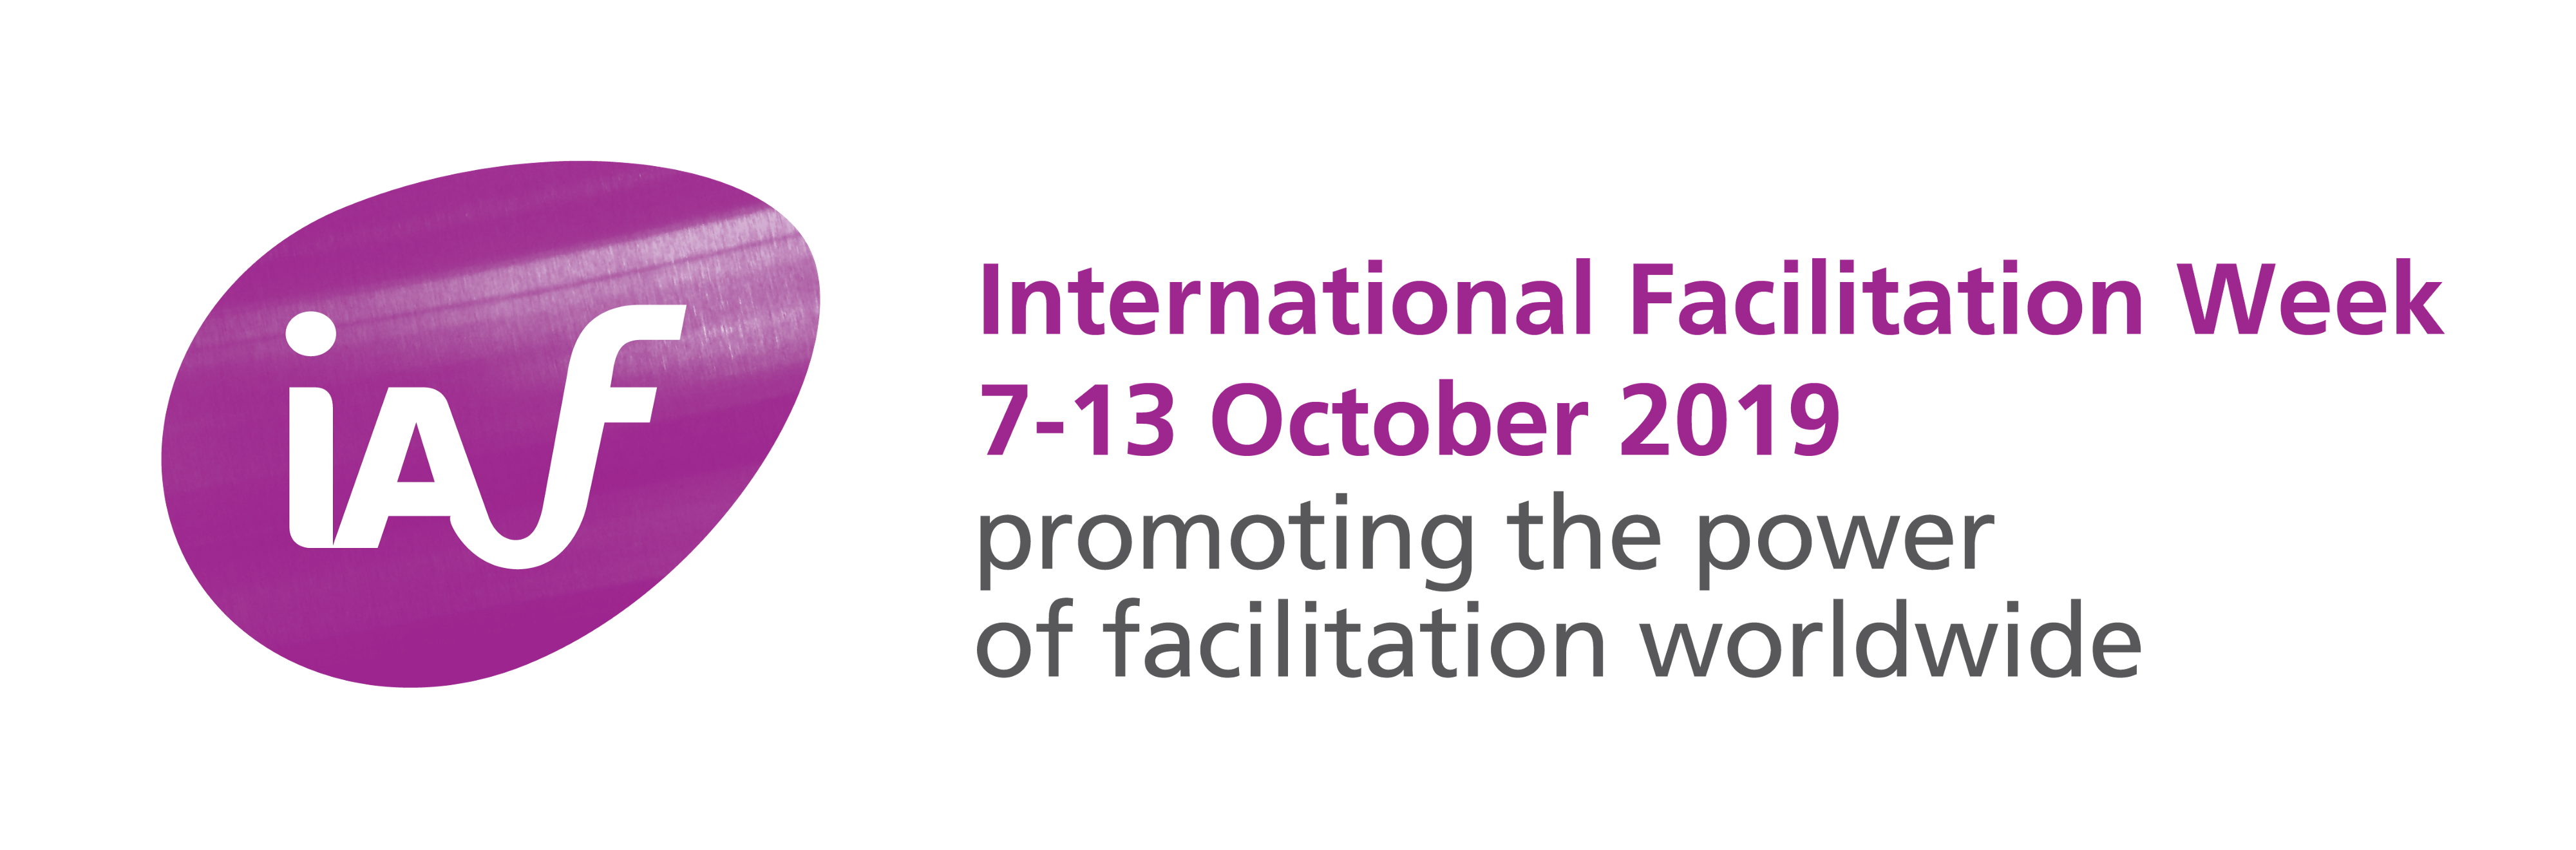 international facilitation week 2019 banner